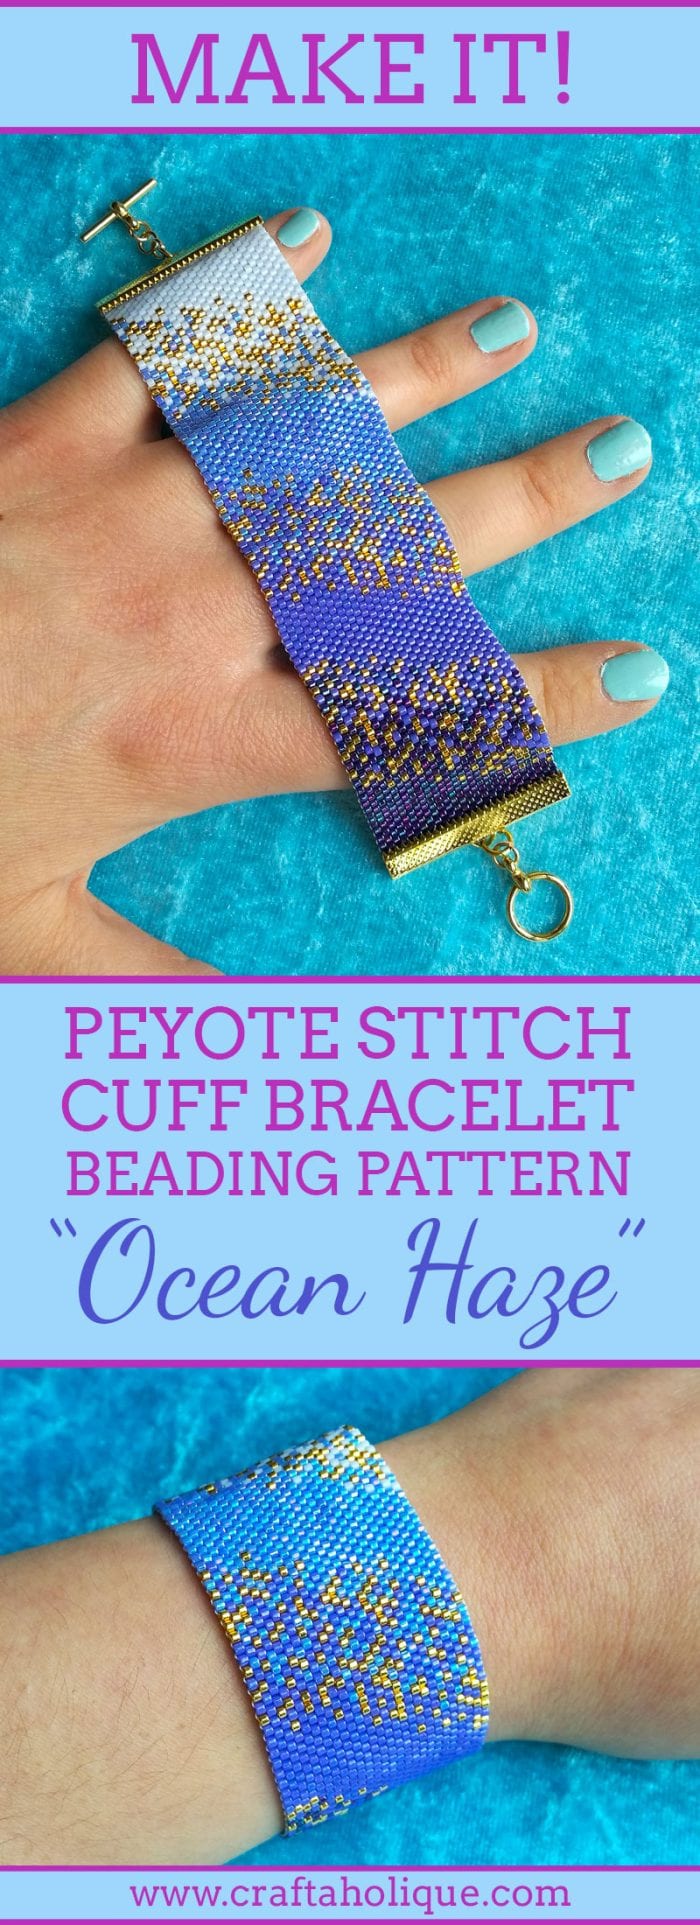 Peyote Stitch Beaded Cuff Bracelet Pattern - Ocean Haze - Craftaholique